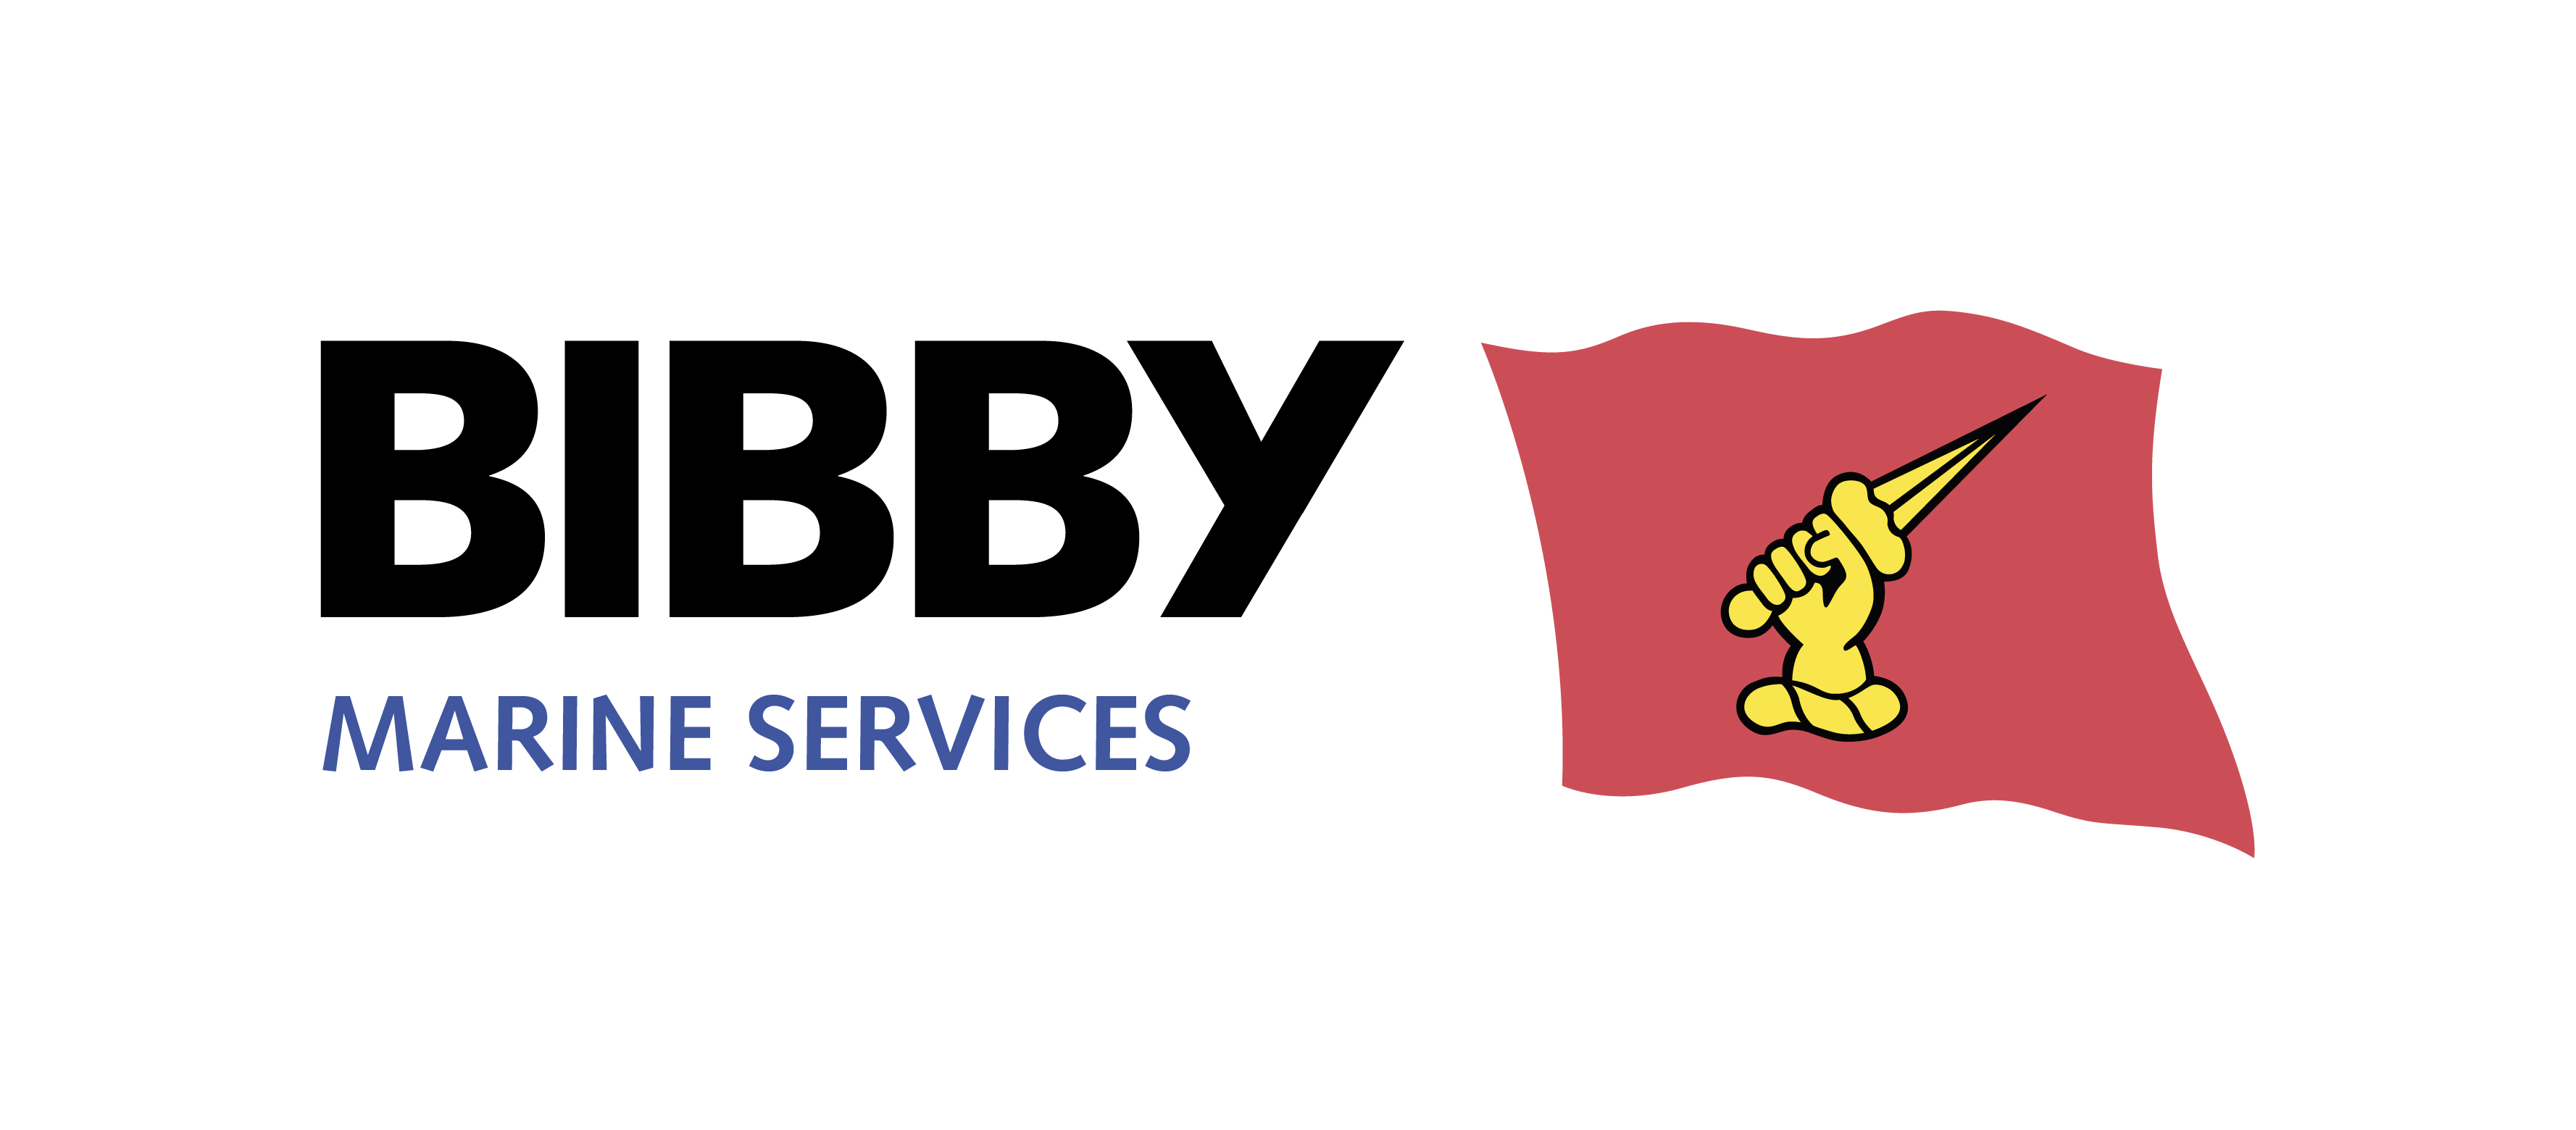 Bibby Marine Services